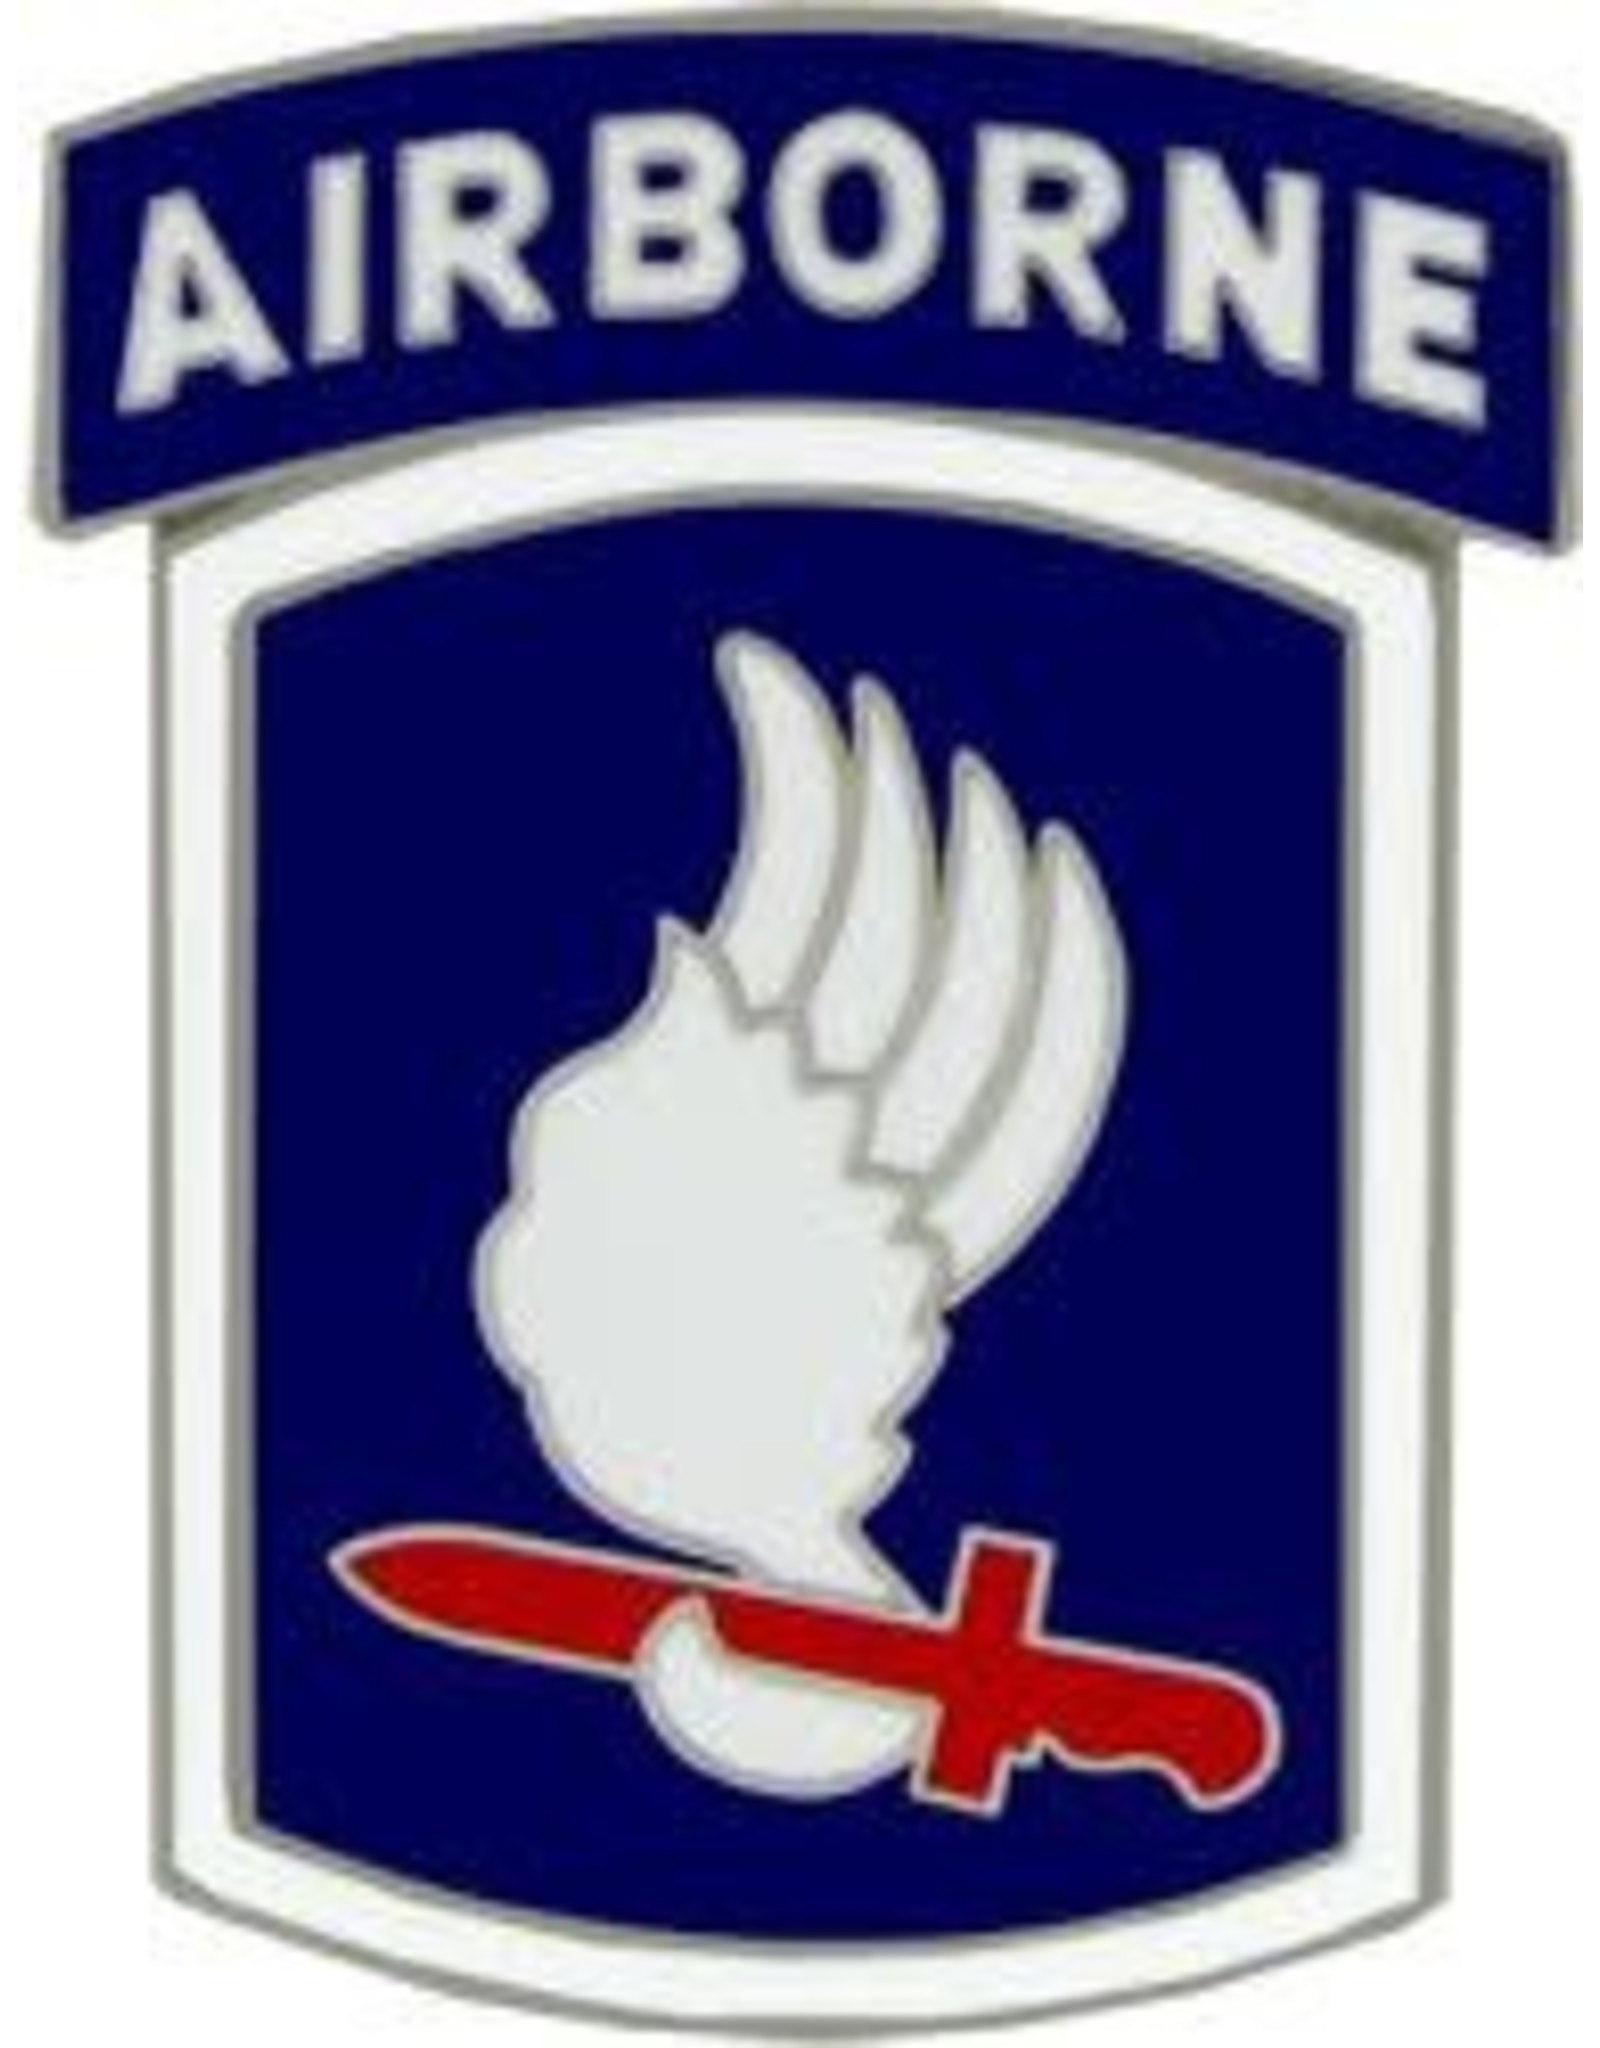 173rd Airborne ID Badge